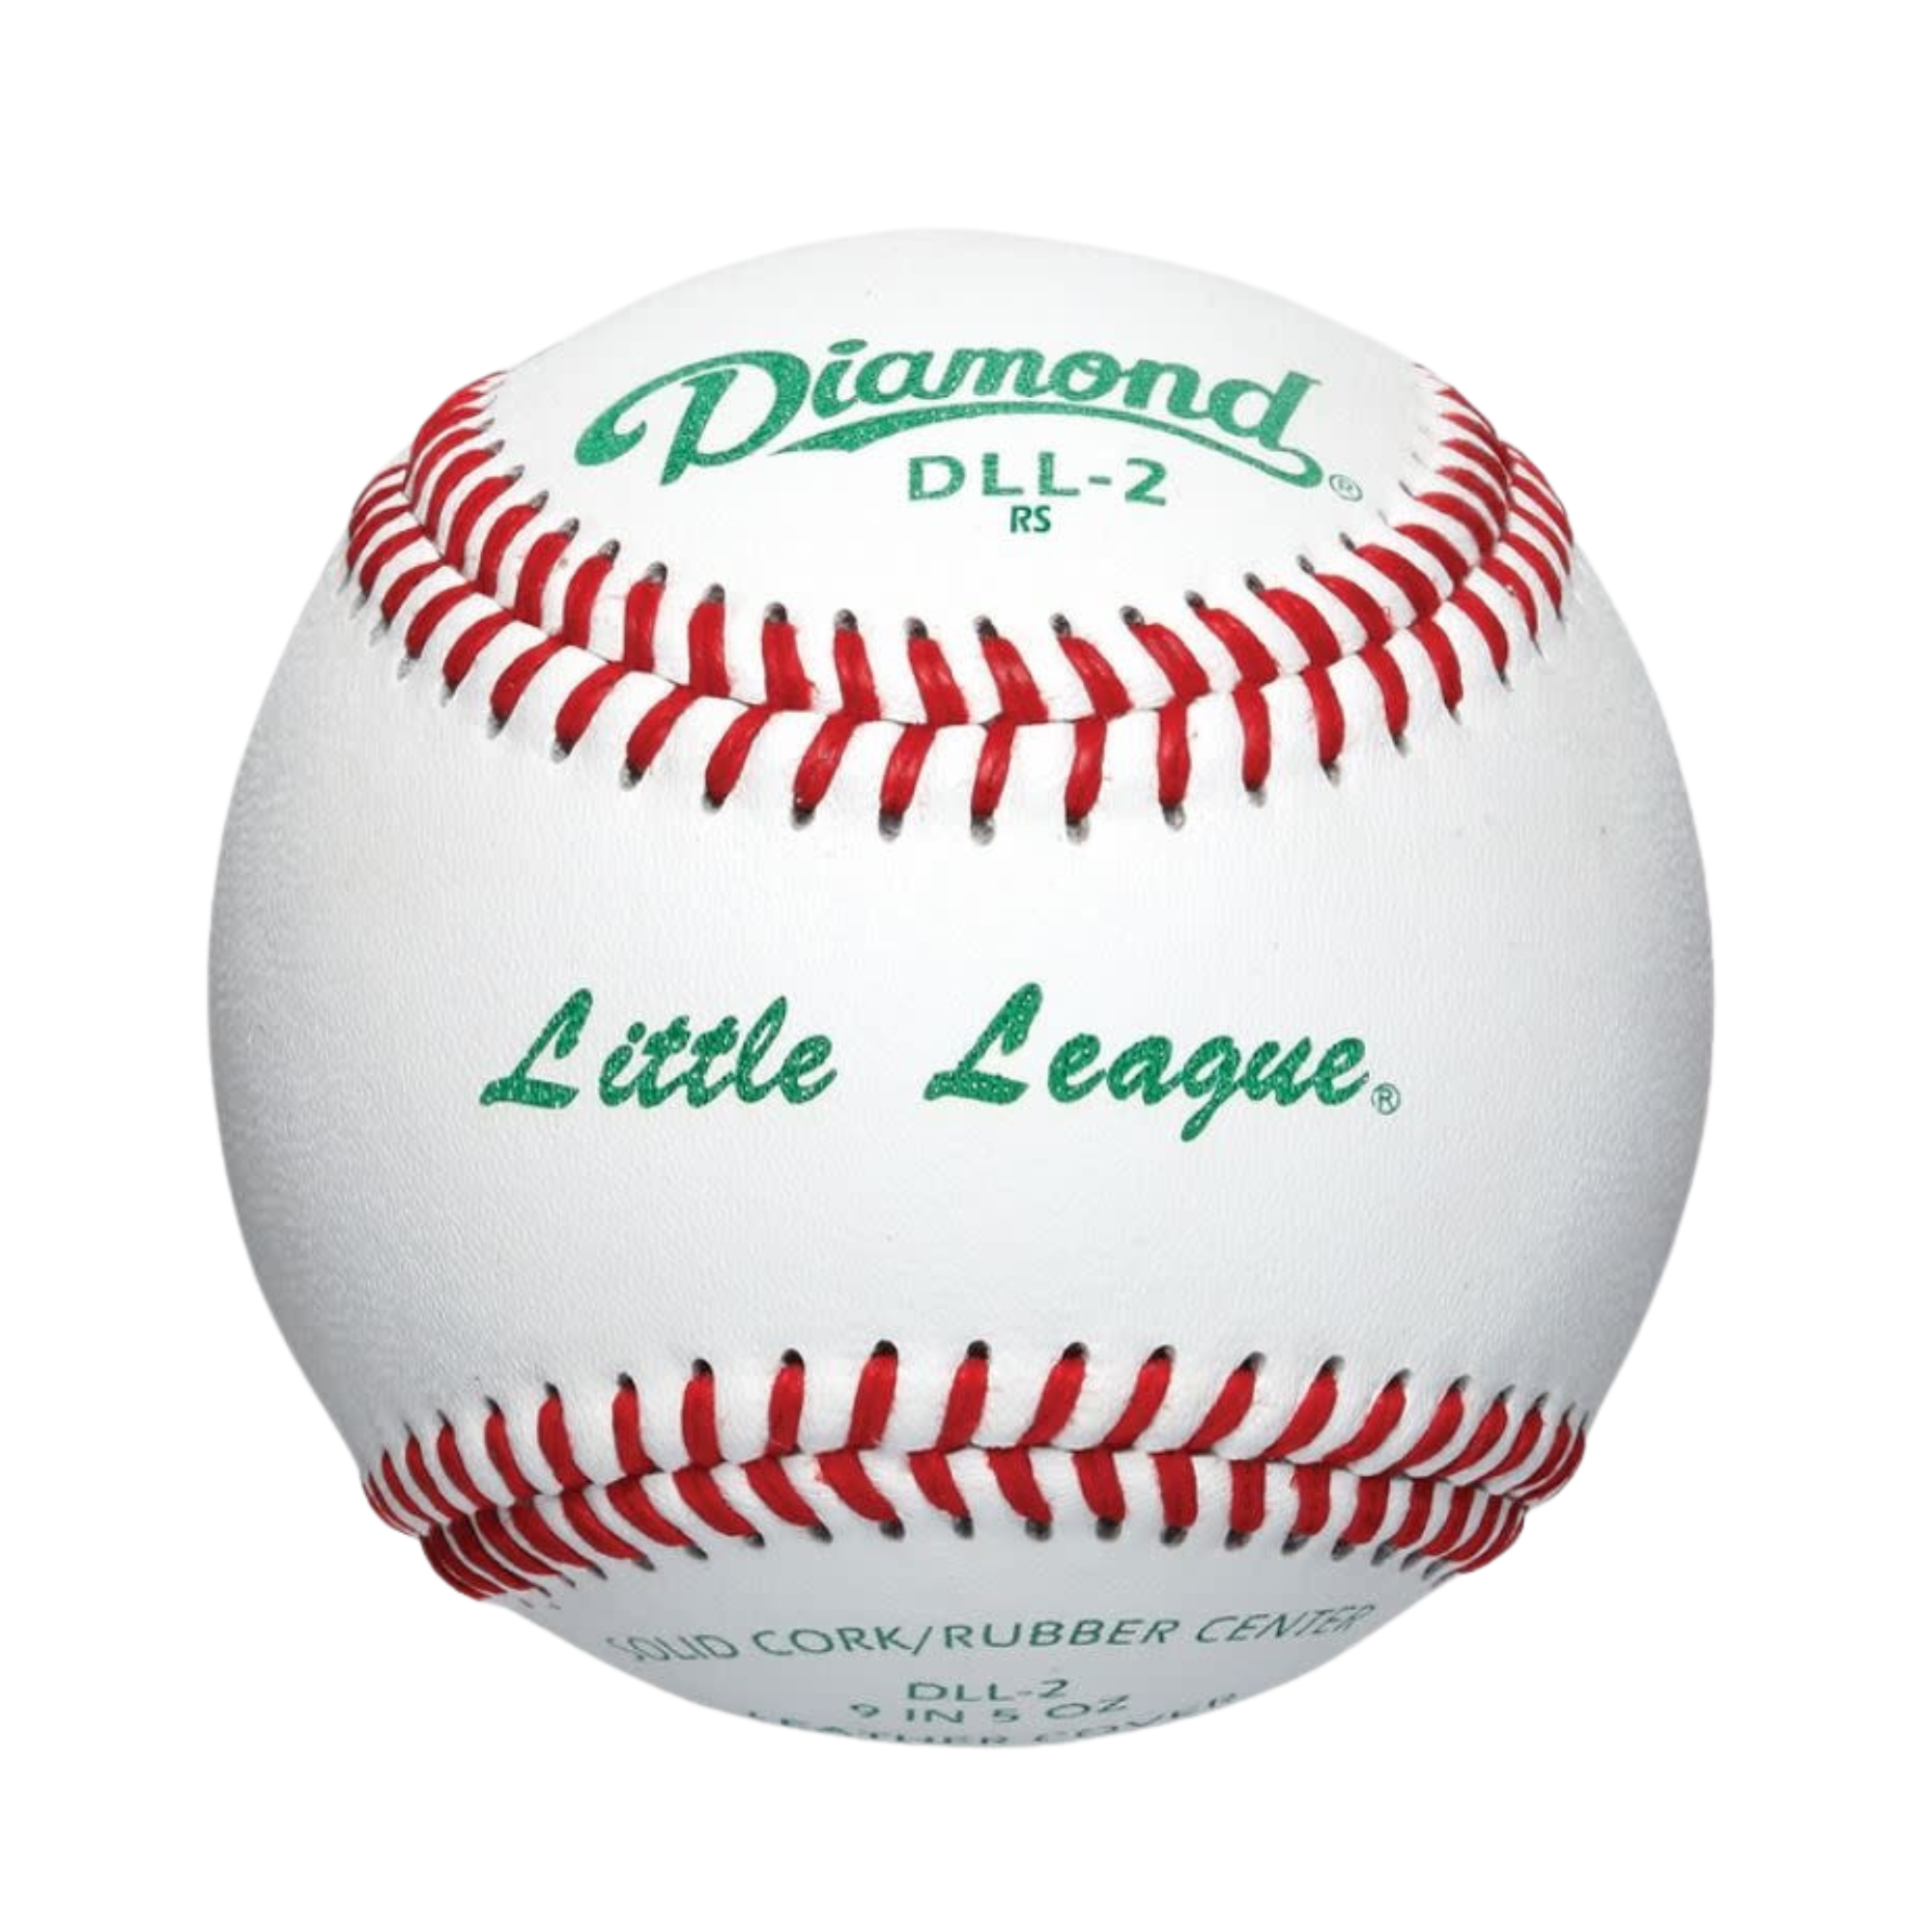 Diamond Sports Diamond Little League DLL-2 Competition Grade (Single)